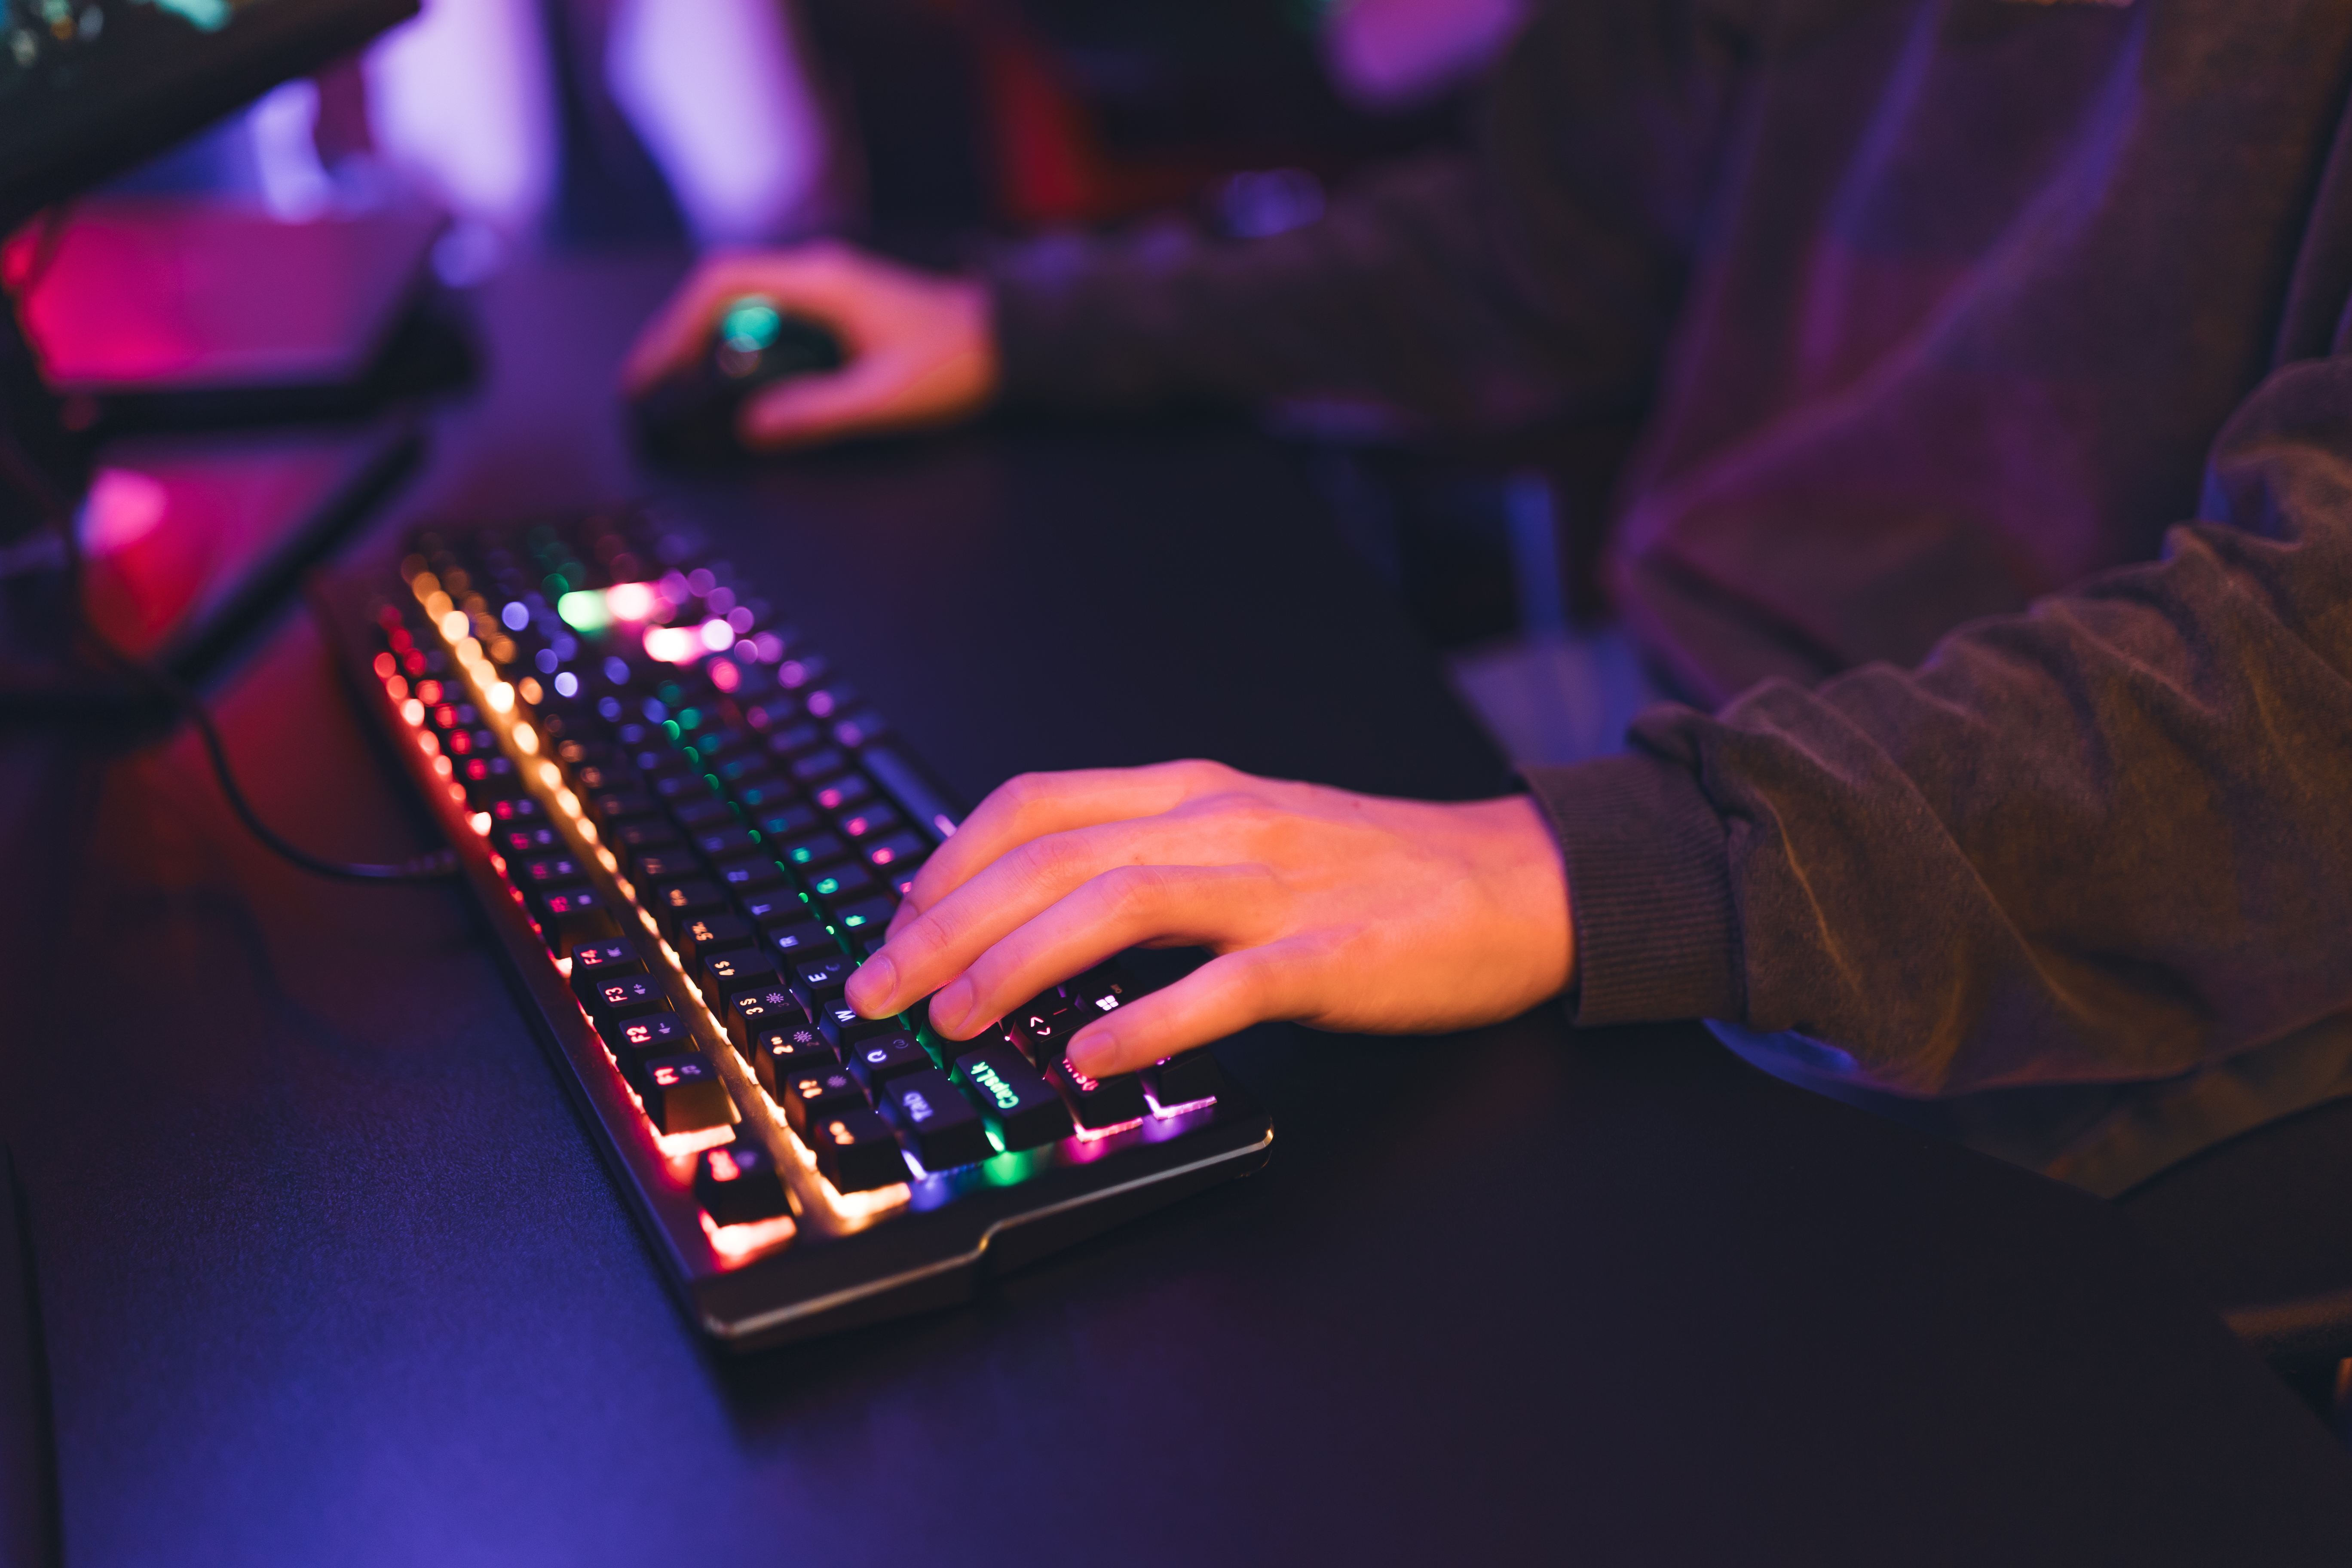 VELA LED Mechanical Gaming Keyboard, black